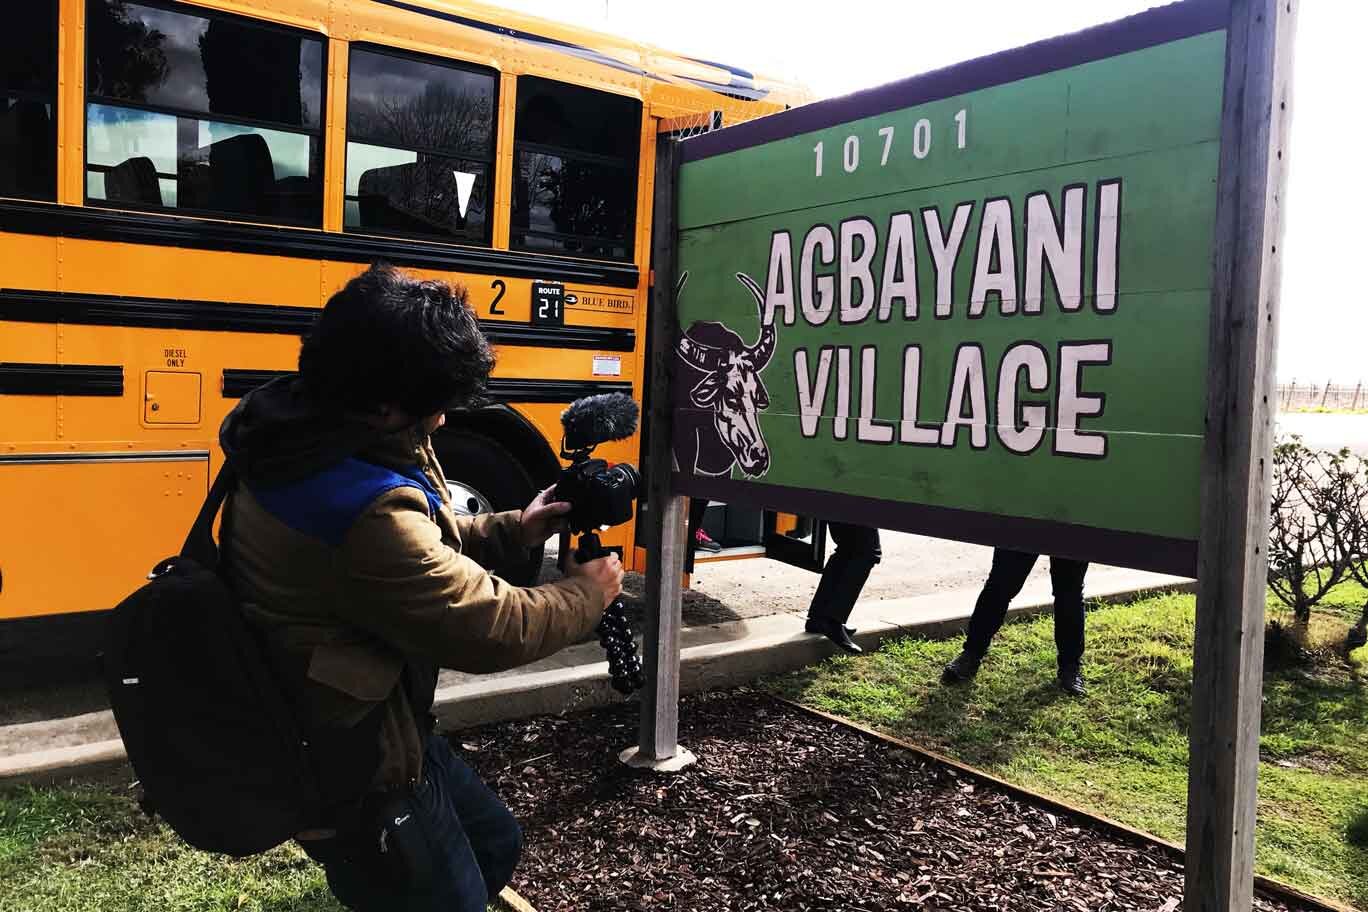  Long Distance producer Patrick Epino filming at Paulo Agbayani Village in Delano, California. 